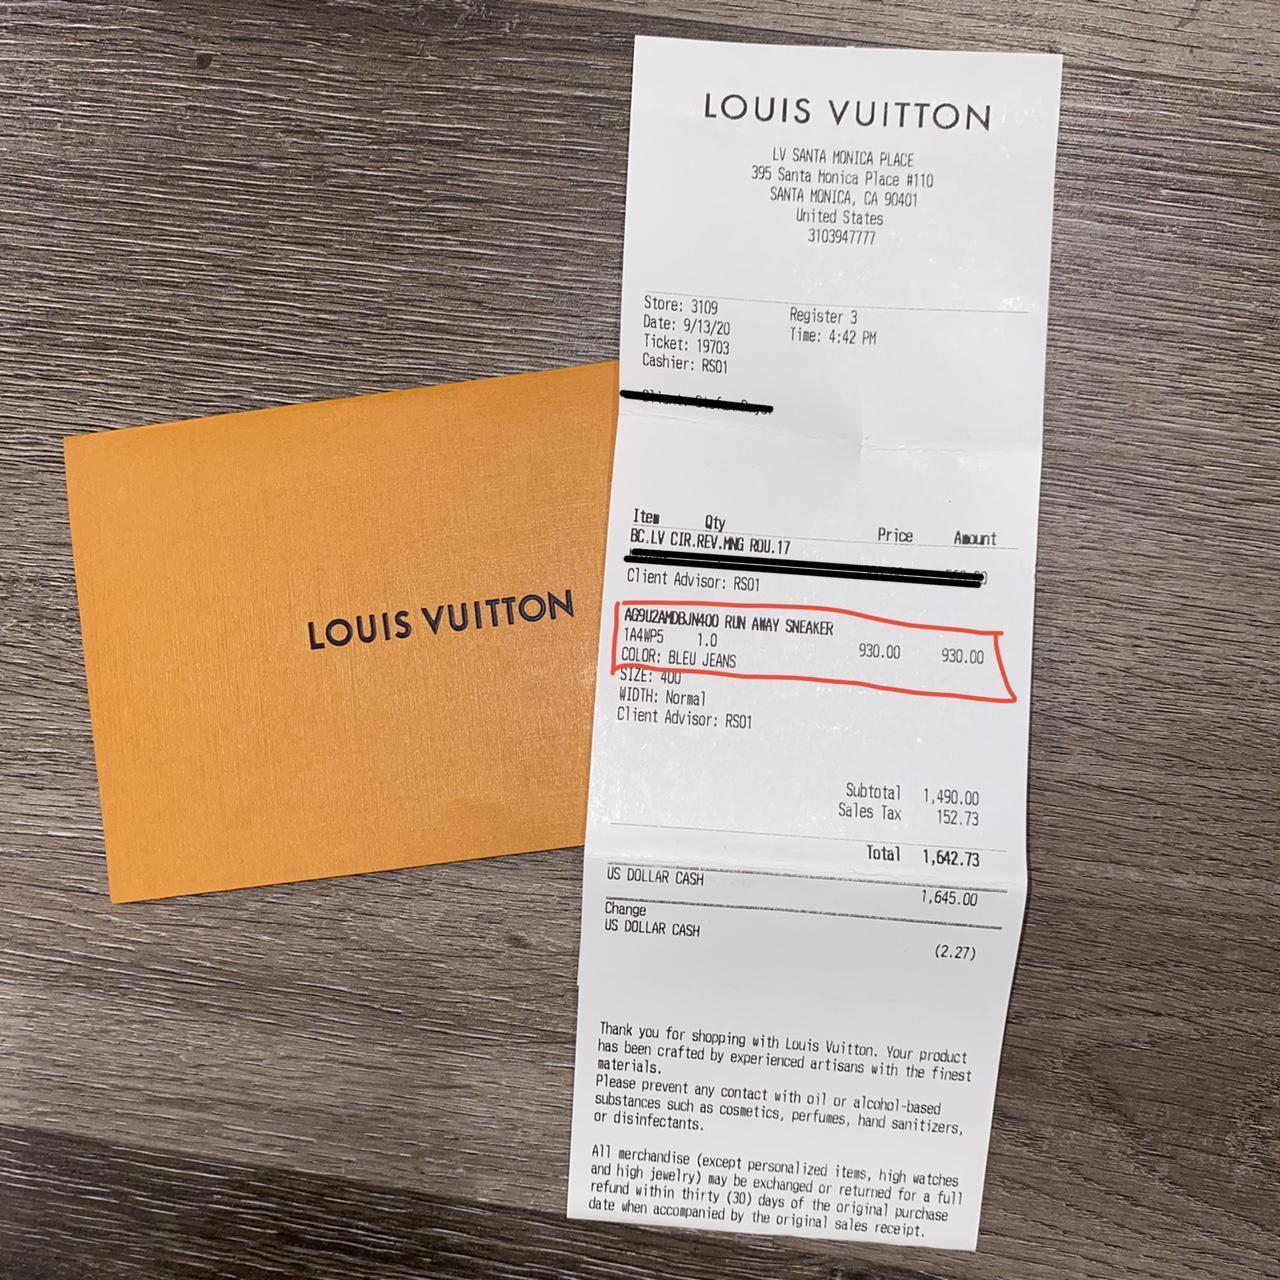 LV “Louis Vuitton” runaway sneakers for Sale in Los Angeles, CA